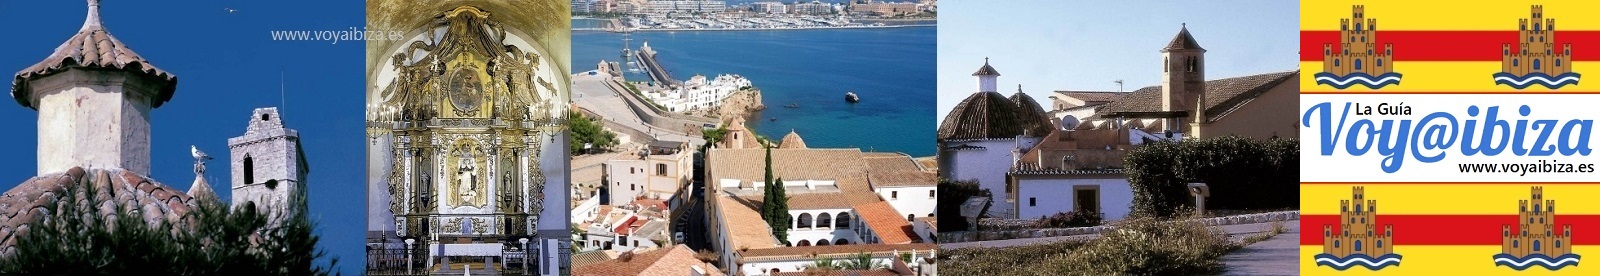 Convento de Ibiza. Convent d'Eivissa